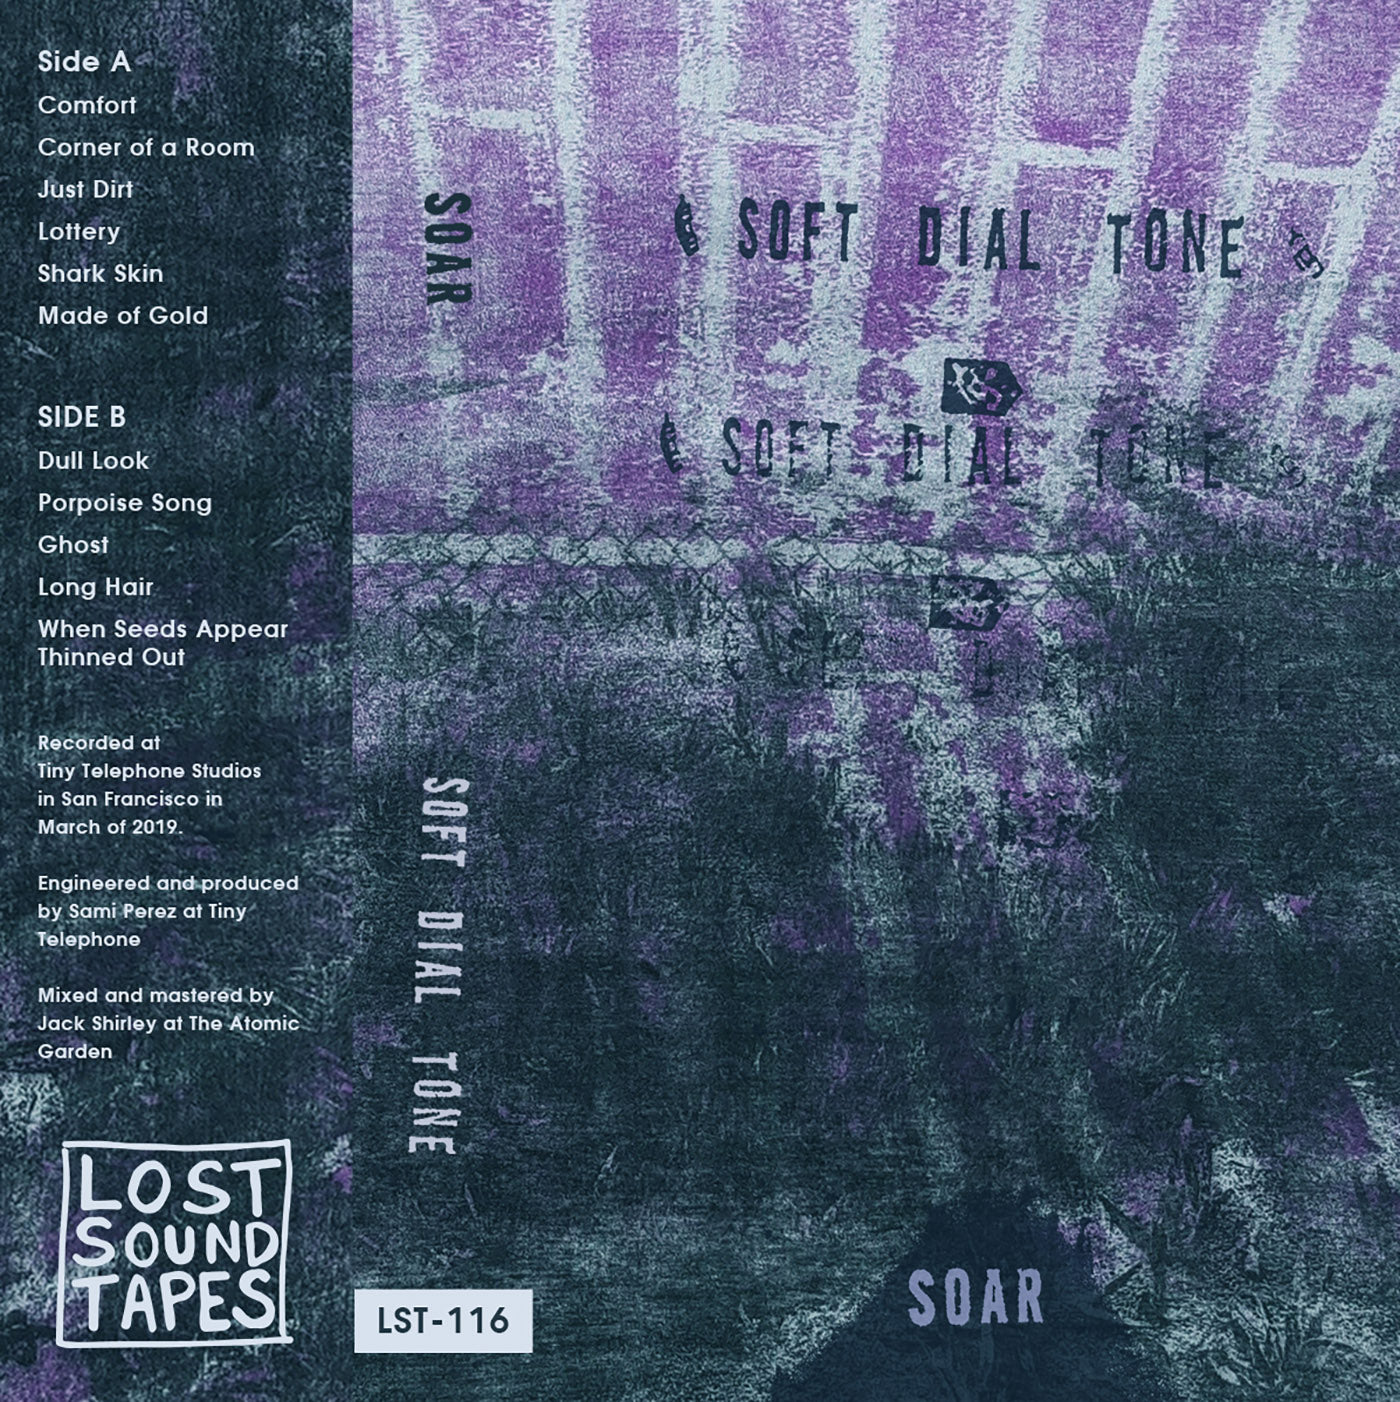 SOAR "Soft Dial Tone" cassette tape